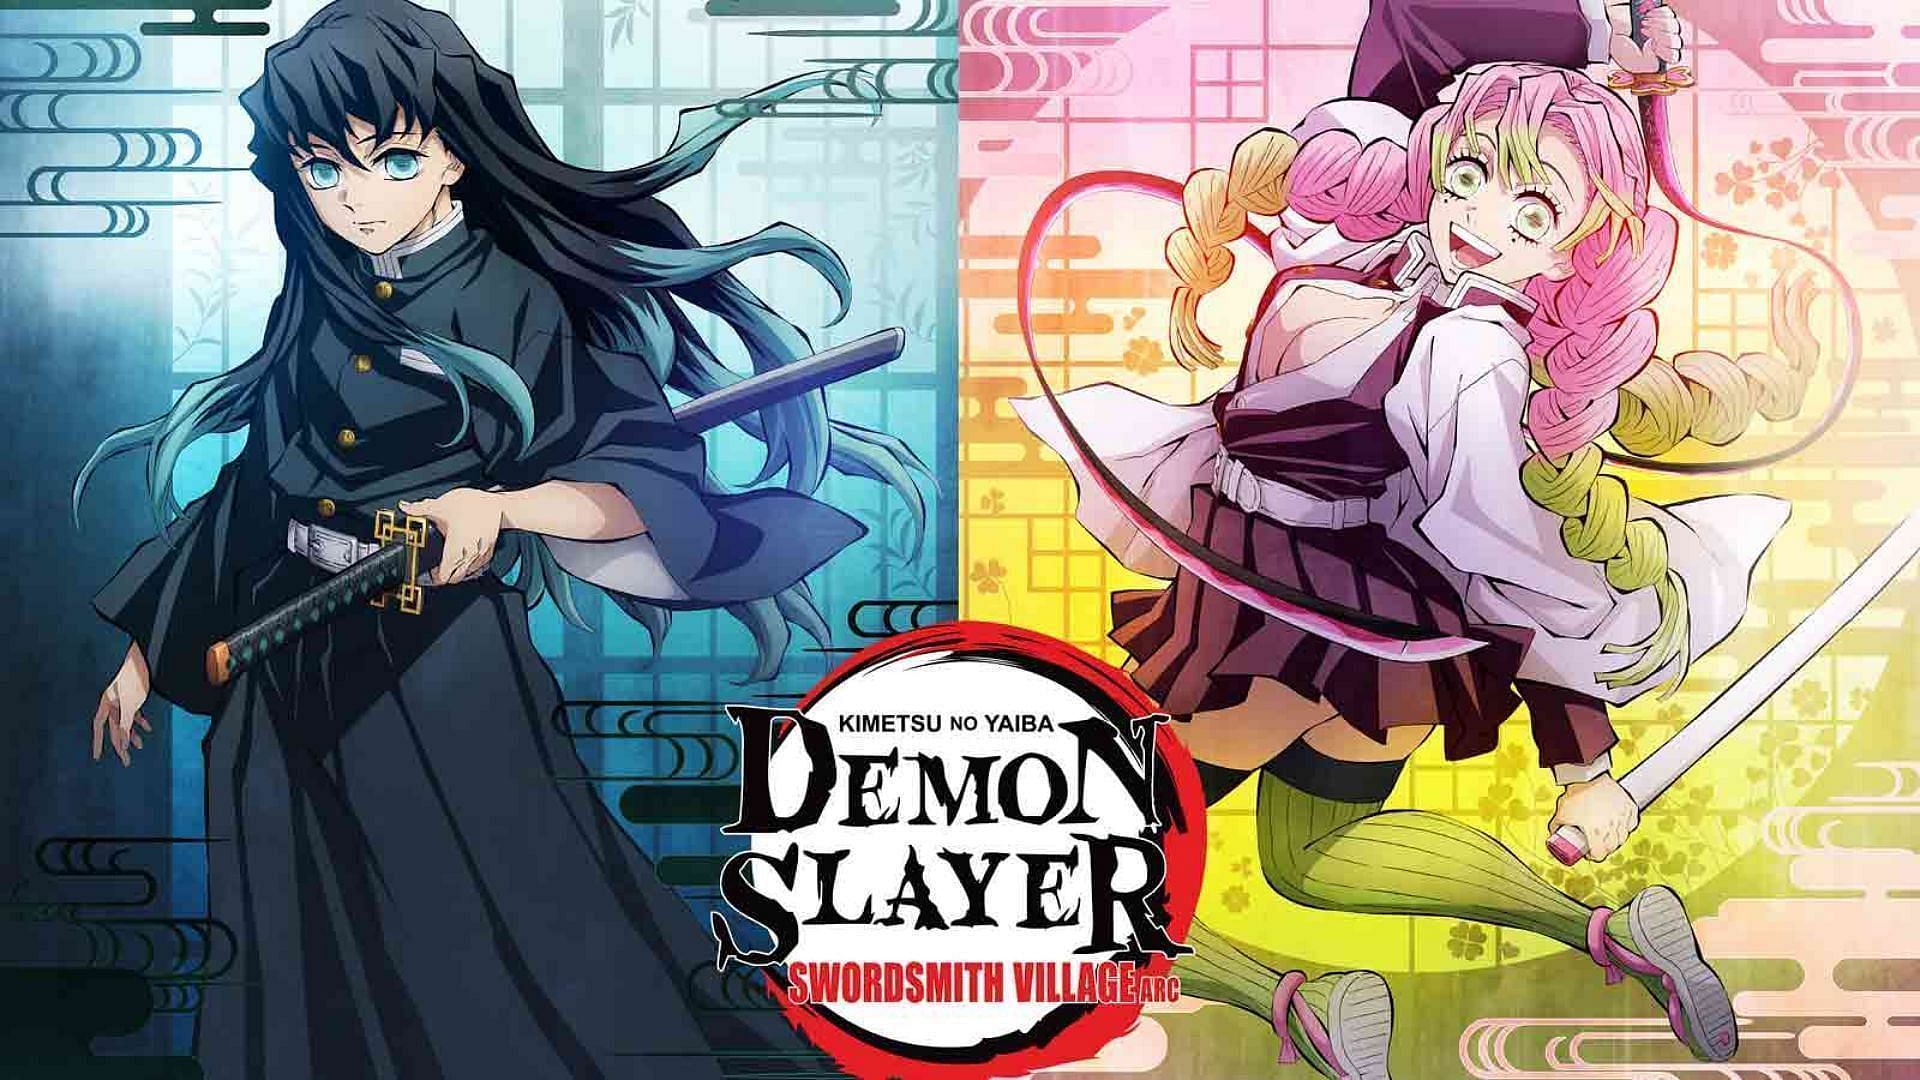 New Demon Slayer Movie Manga Gets Insane Printing Ahead of Release